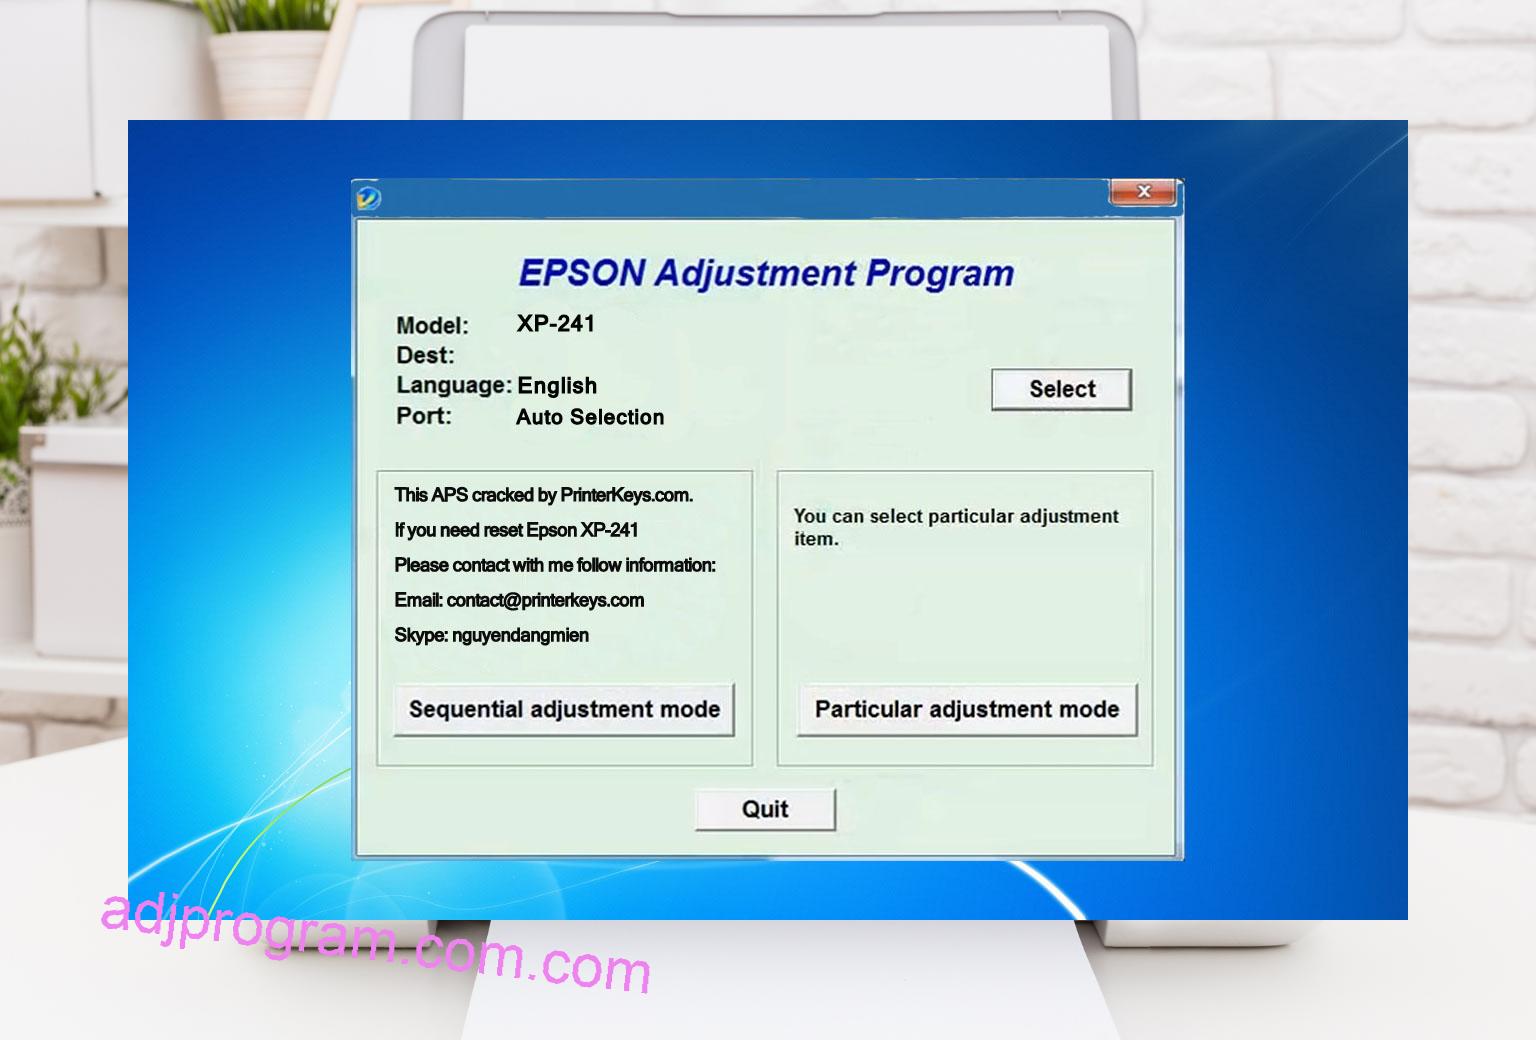 Epson XP-241 Adjustment Program